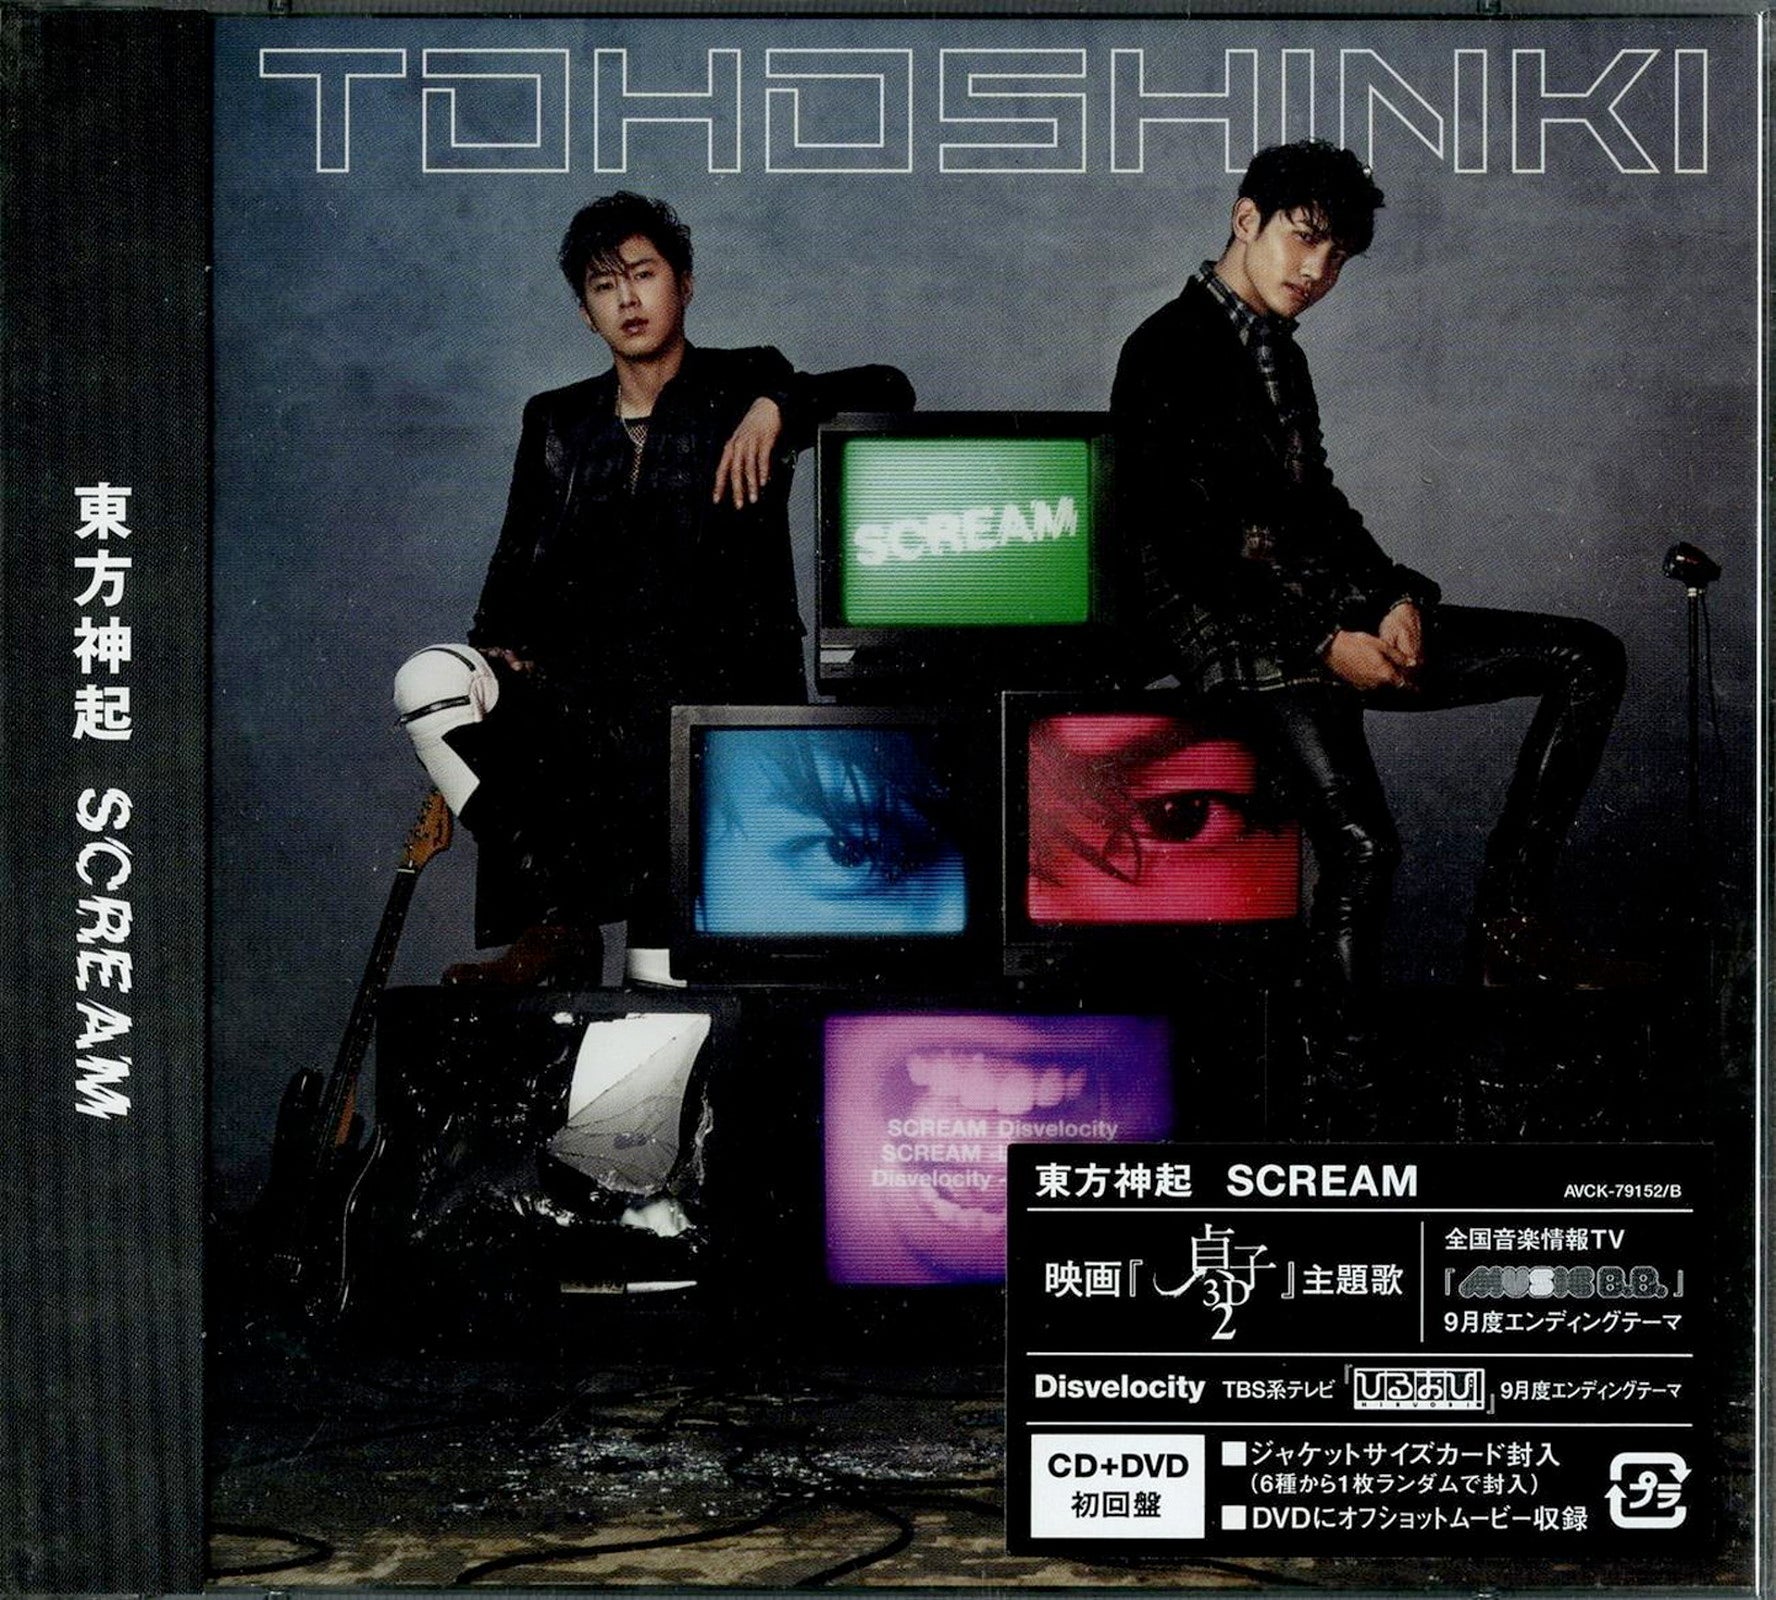 Dong Bang Shin Ki (Tohoshinki) - Scream - Japan CD+DVD Limited